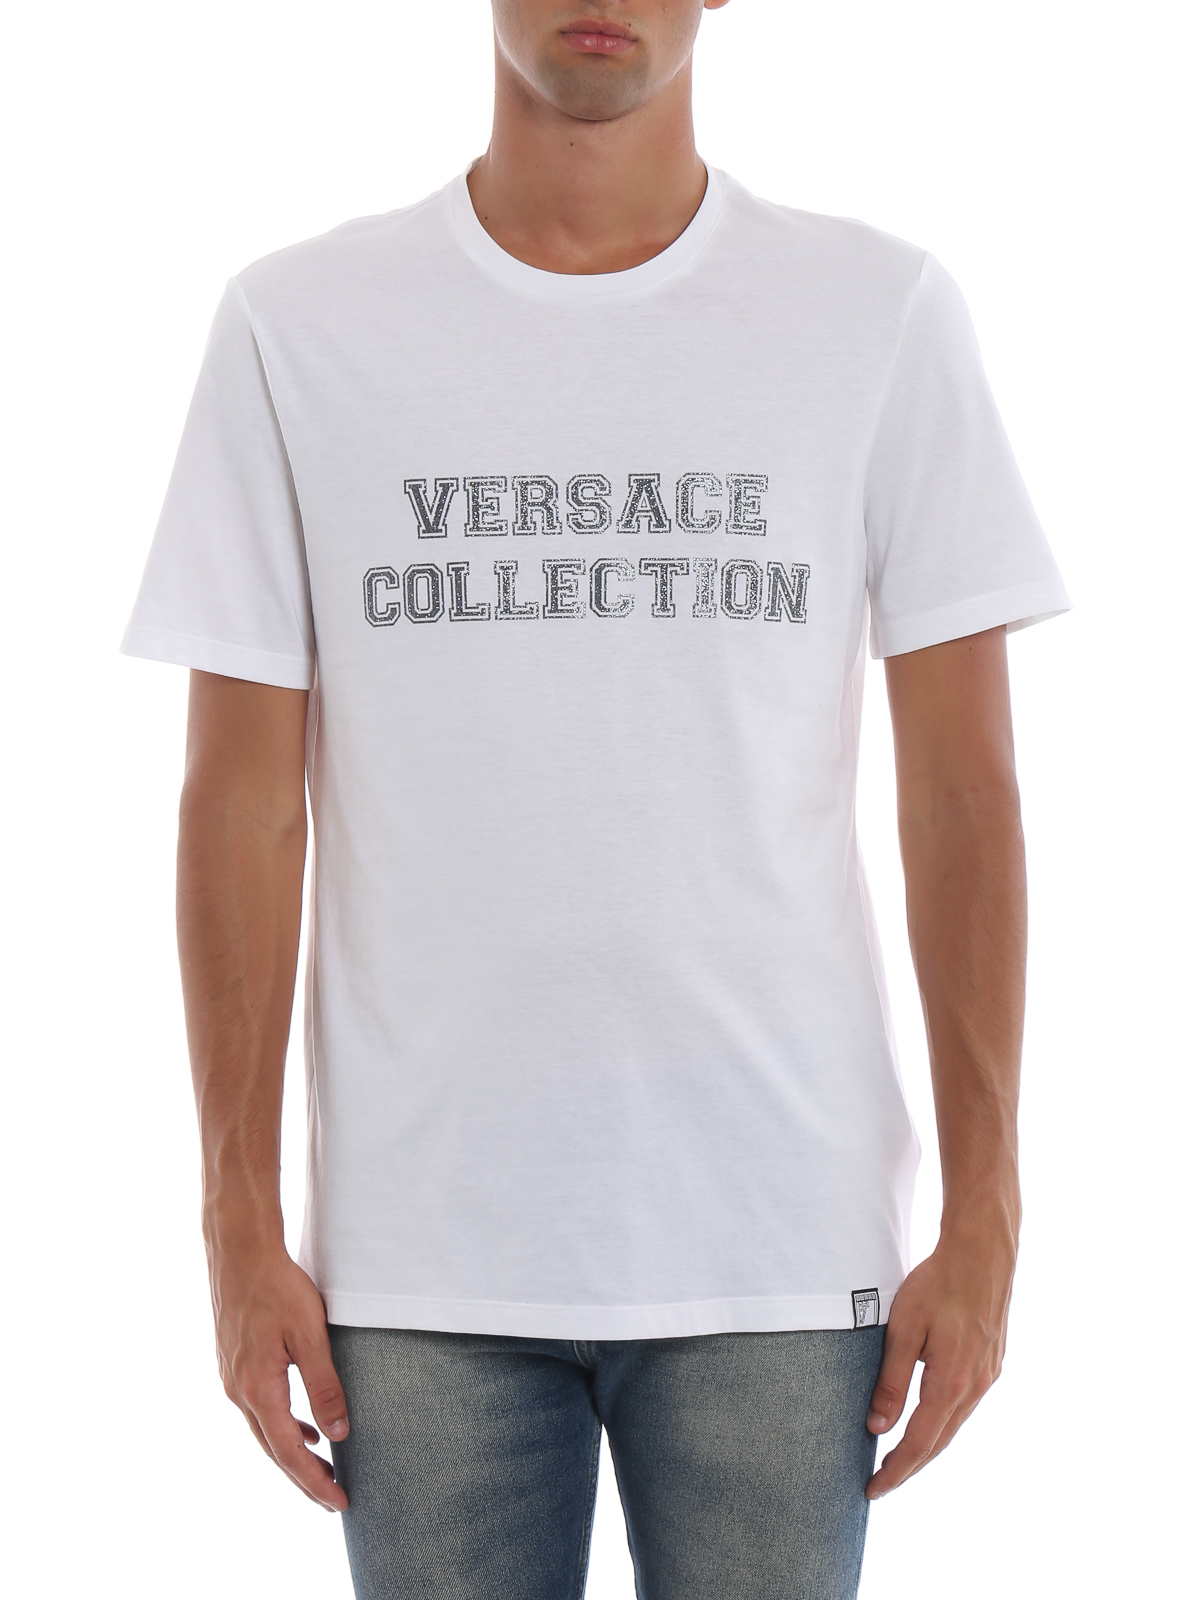 Versace collection. LF collection футболка мужская. Футболка Версаче оригинал. B C collection футболка.